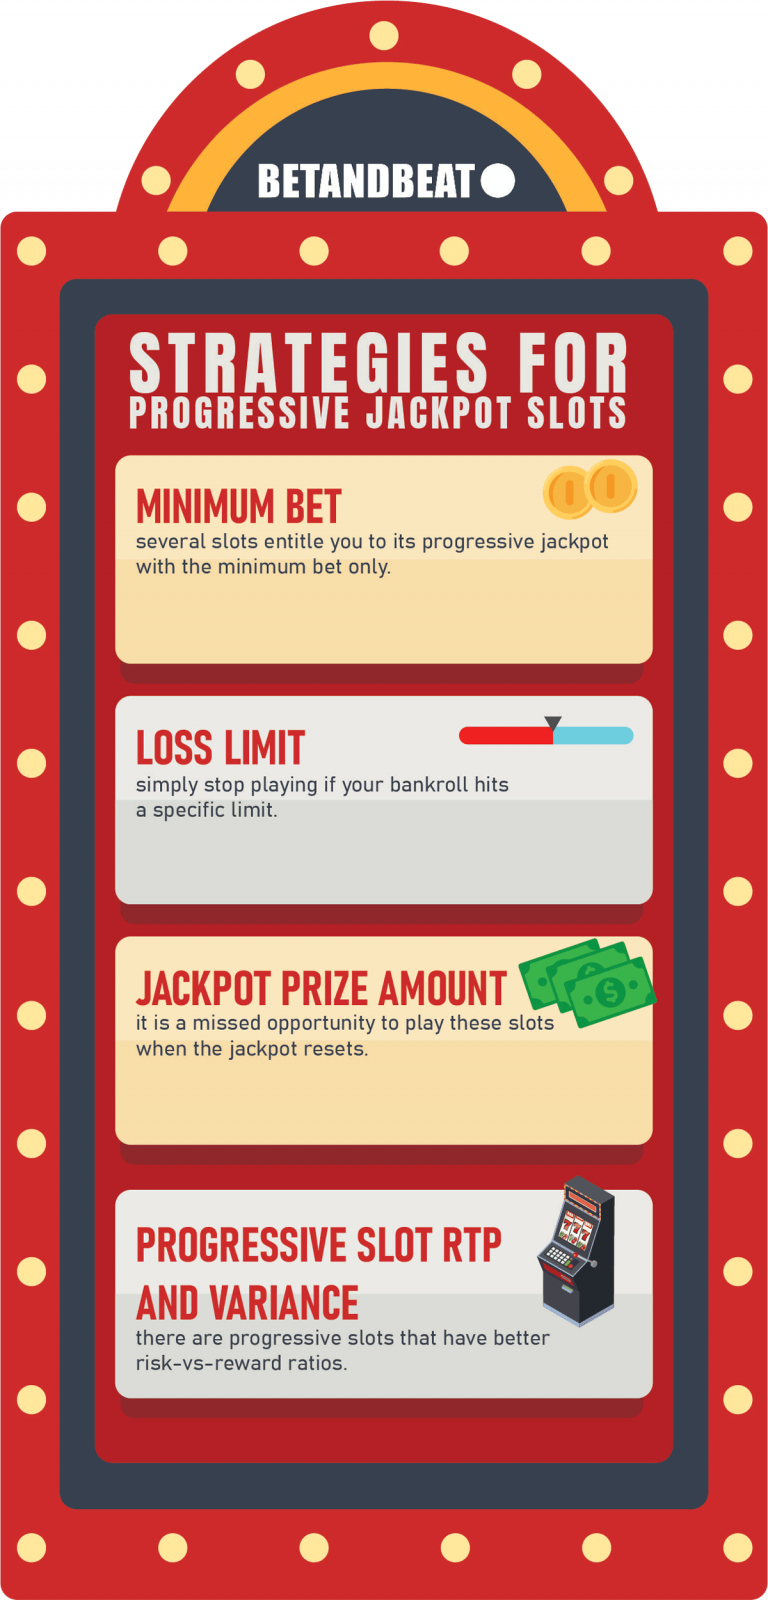 How To Win a Progressive Jackpot